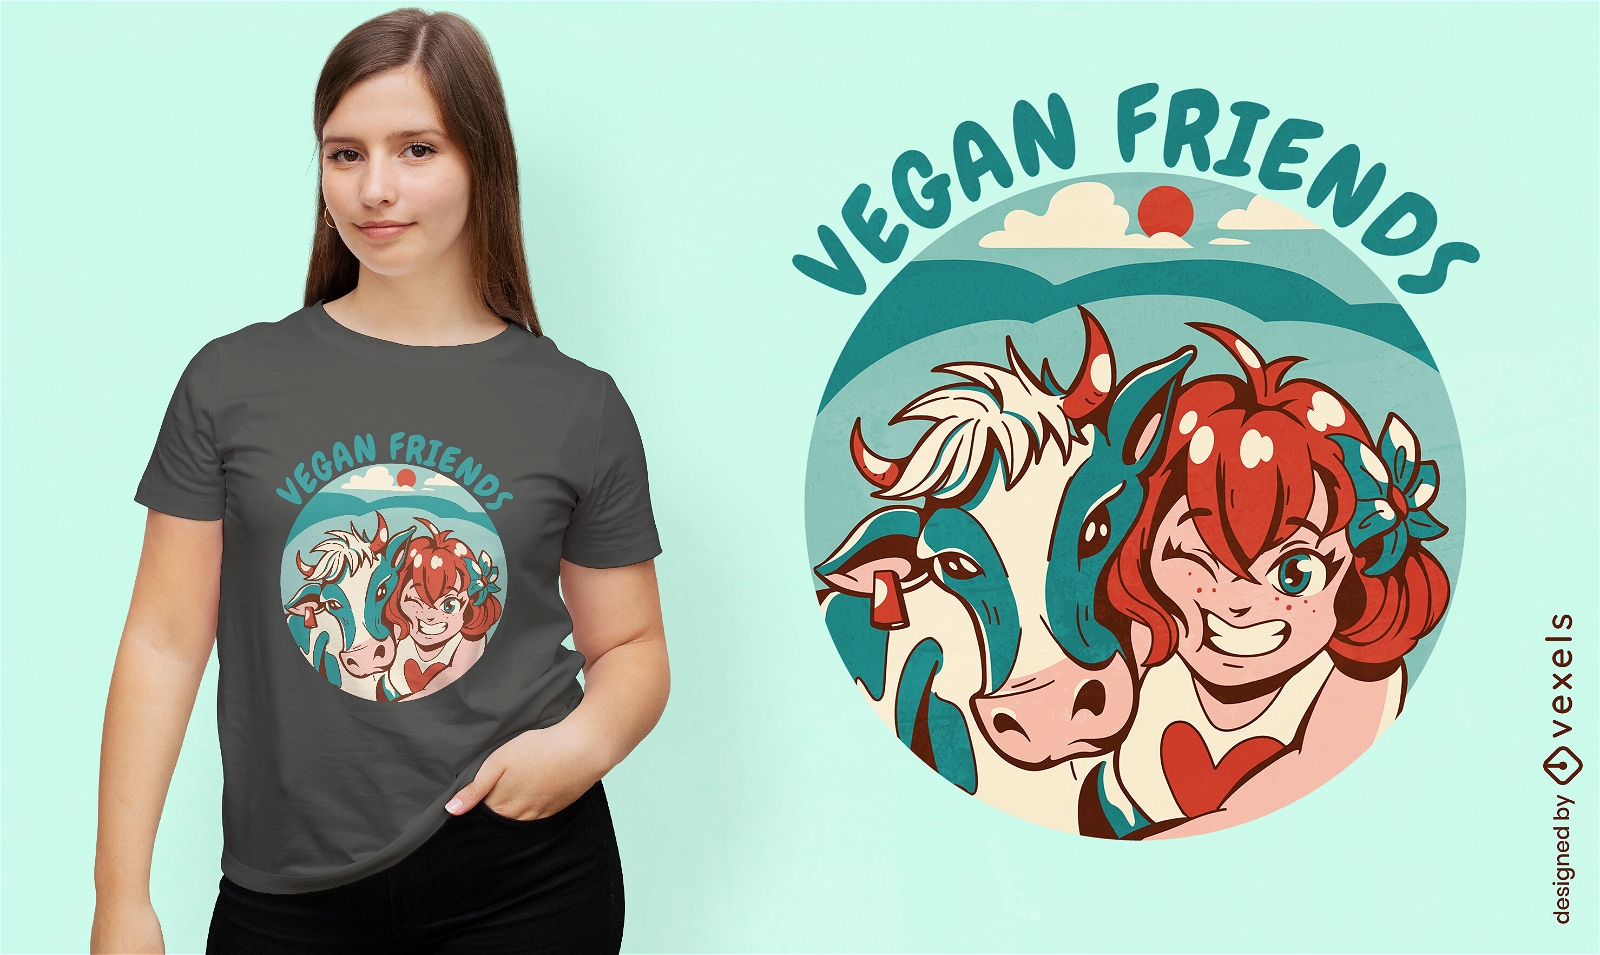 Vegane Freunde Kuh M?dchen T-Shirt Design